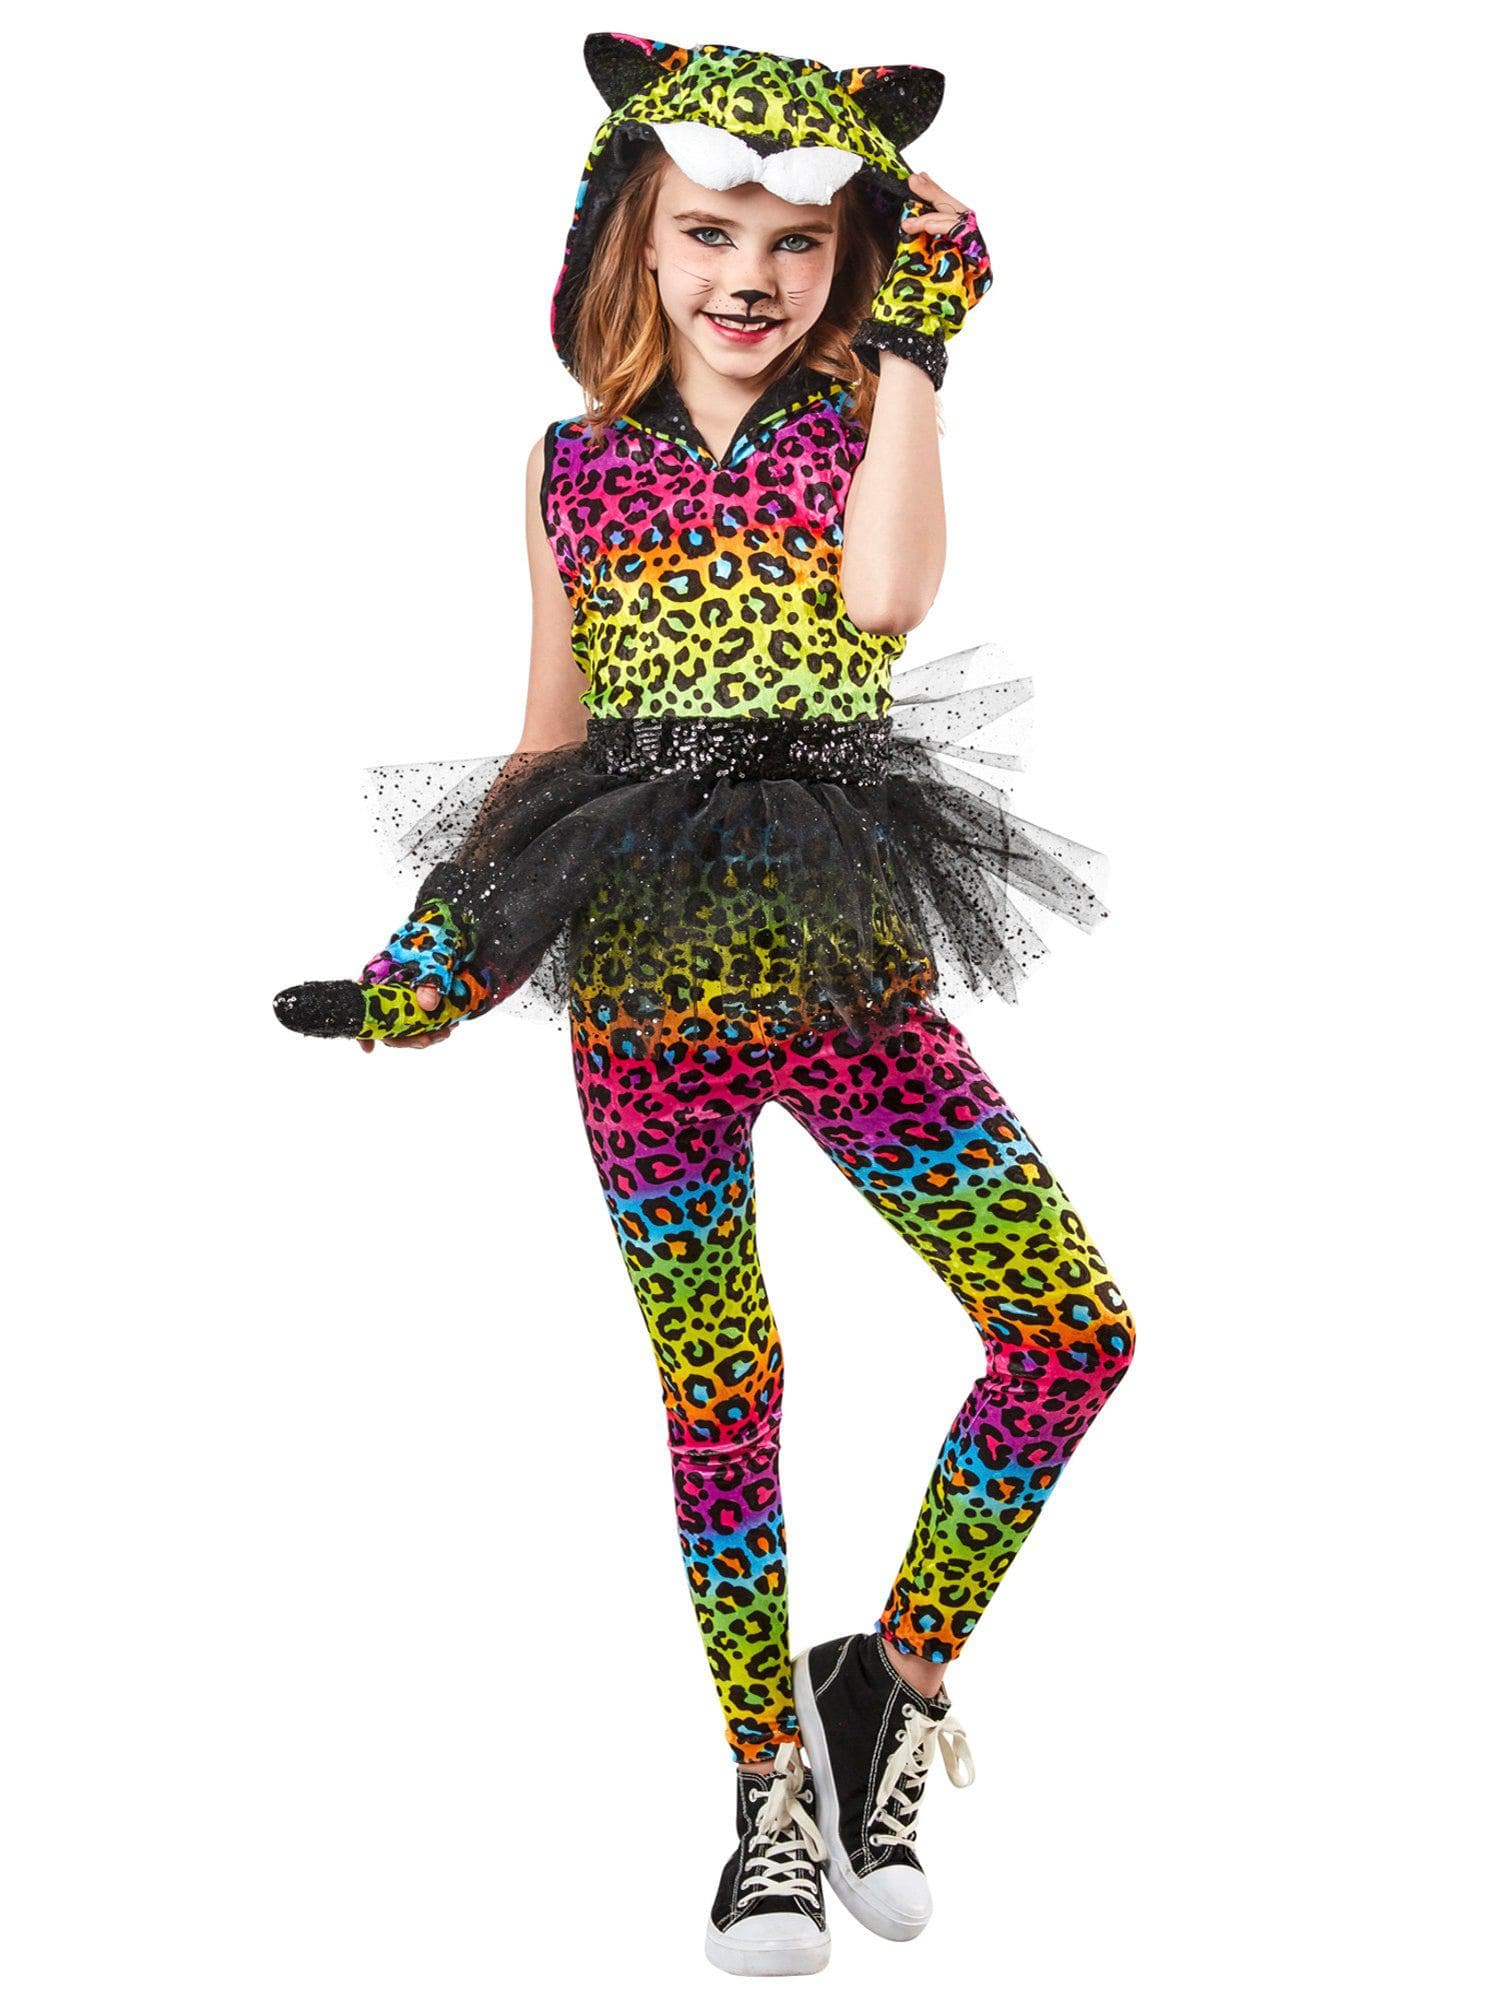 Neon Leopard Kids Costume - costumes.com